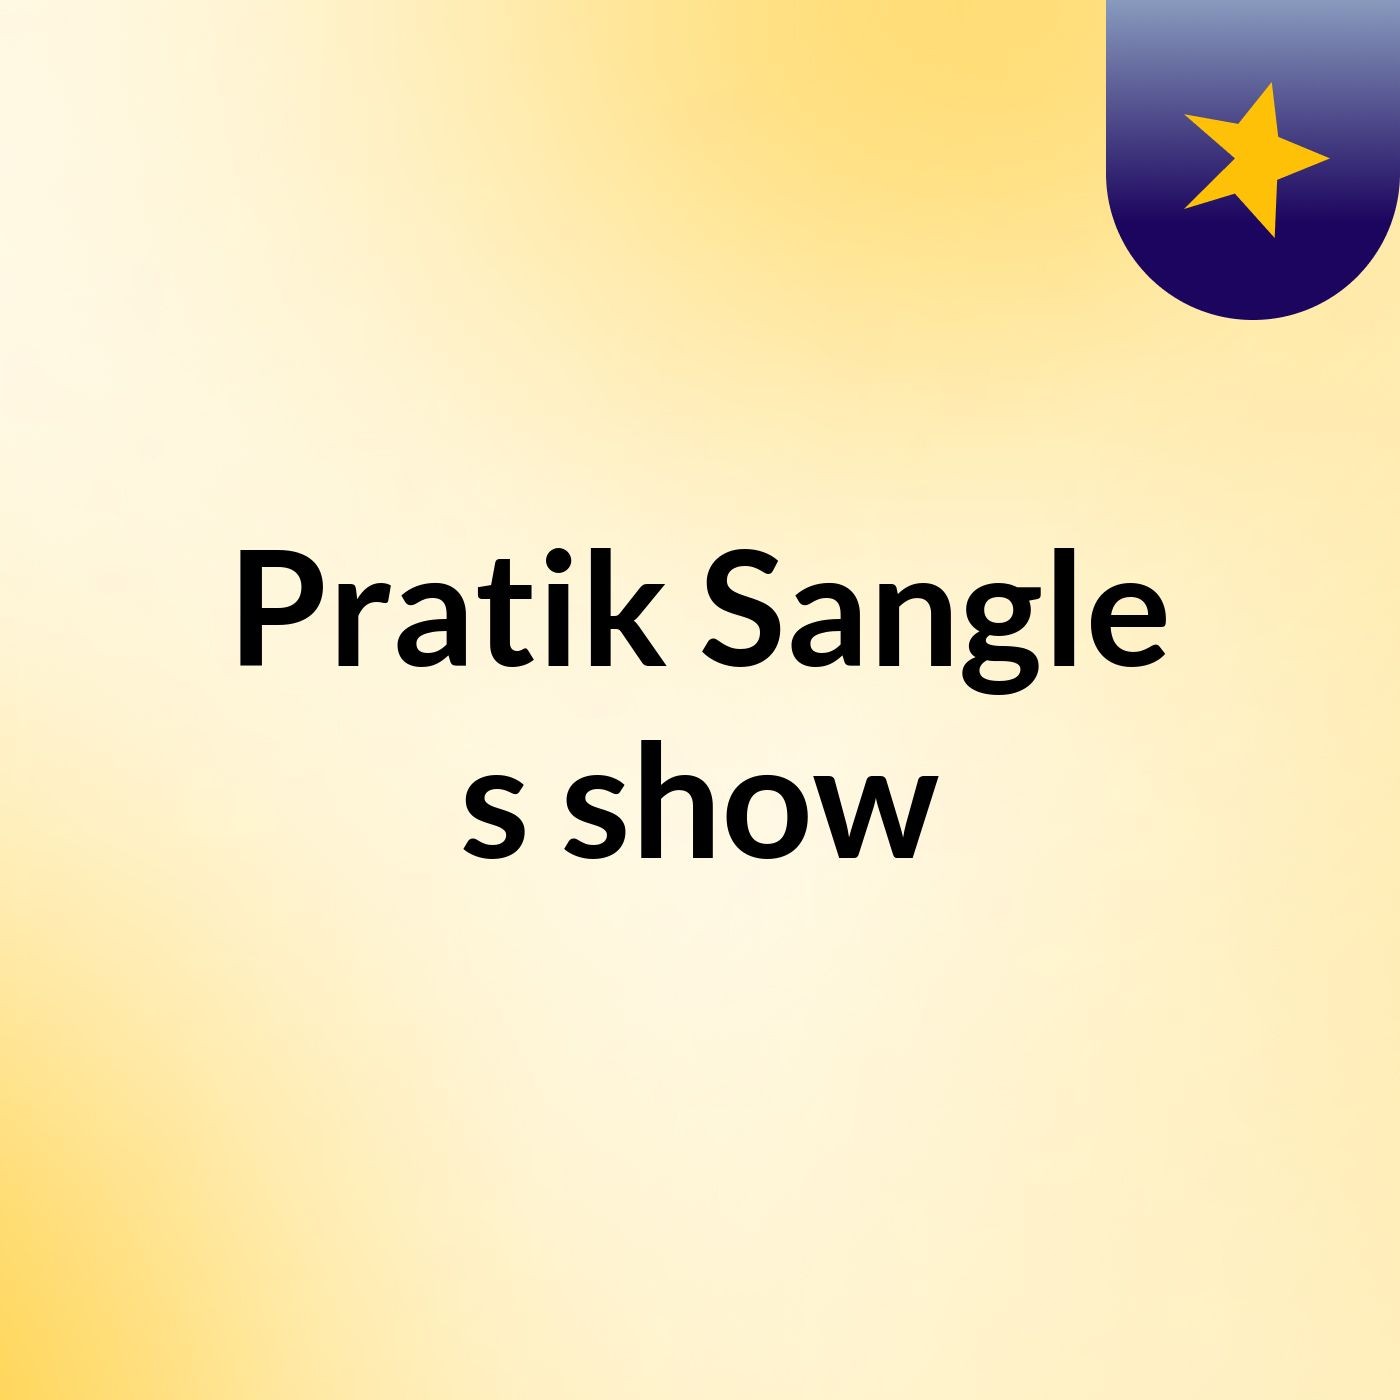 Episode 3 - Pratik Sangle's show